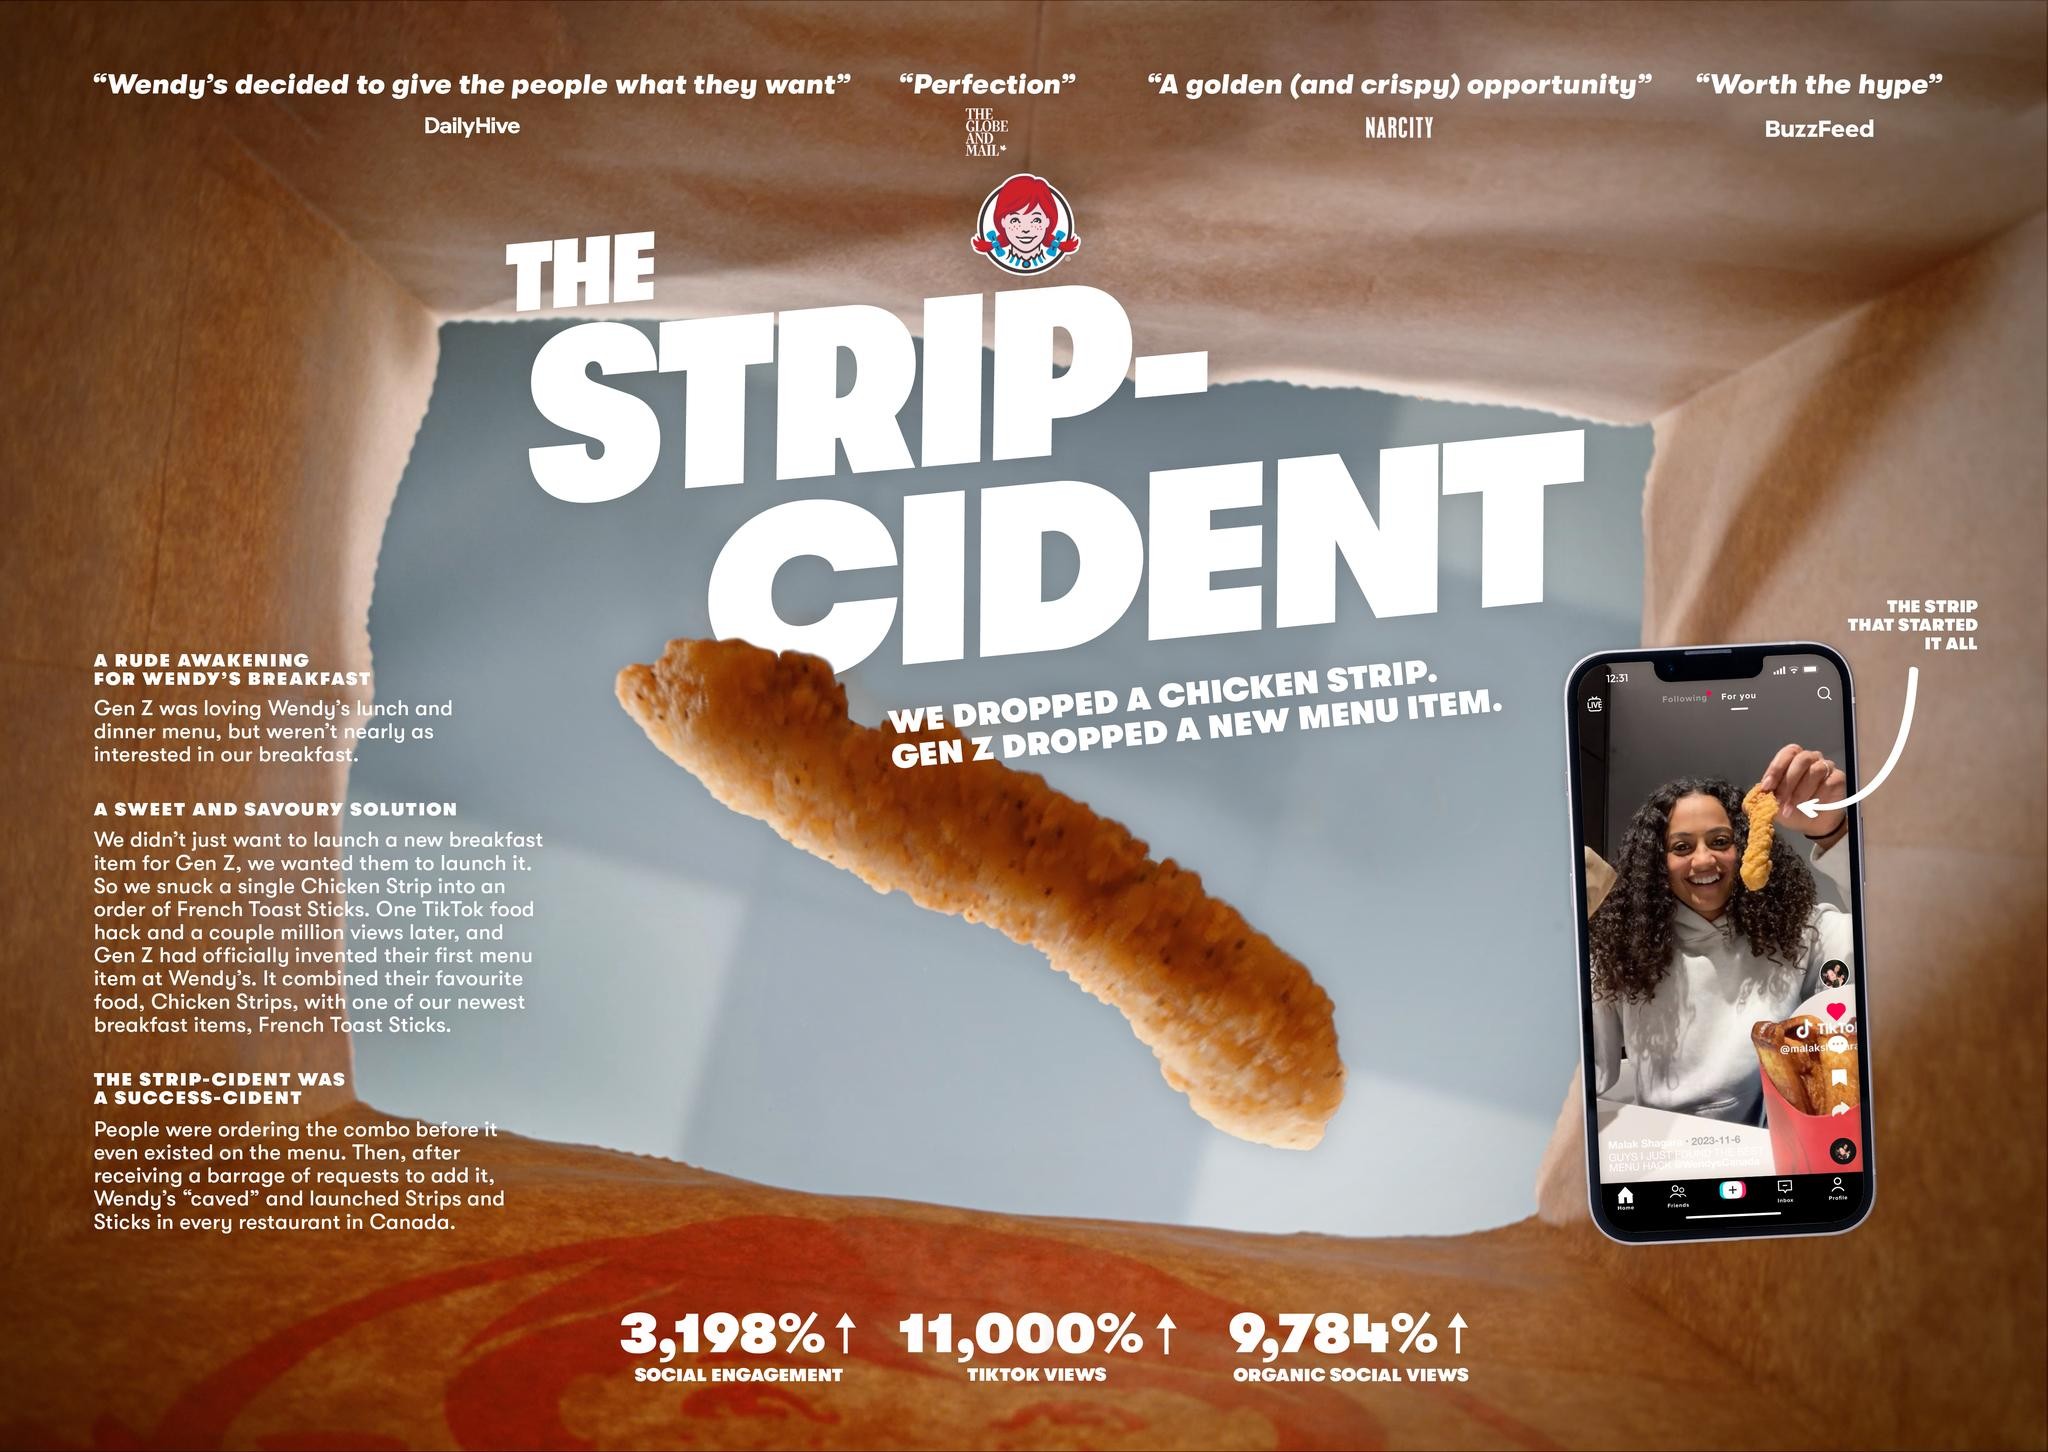 The Strip-cident